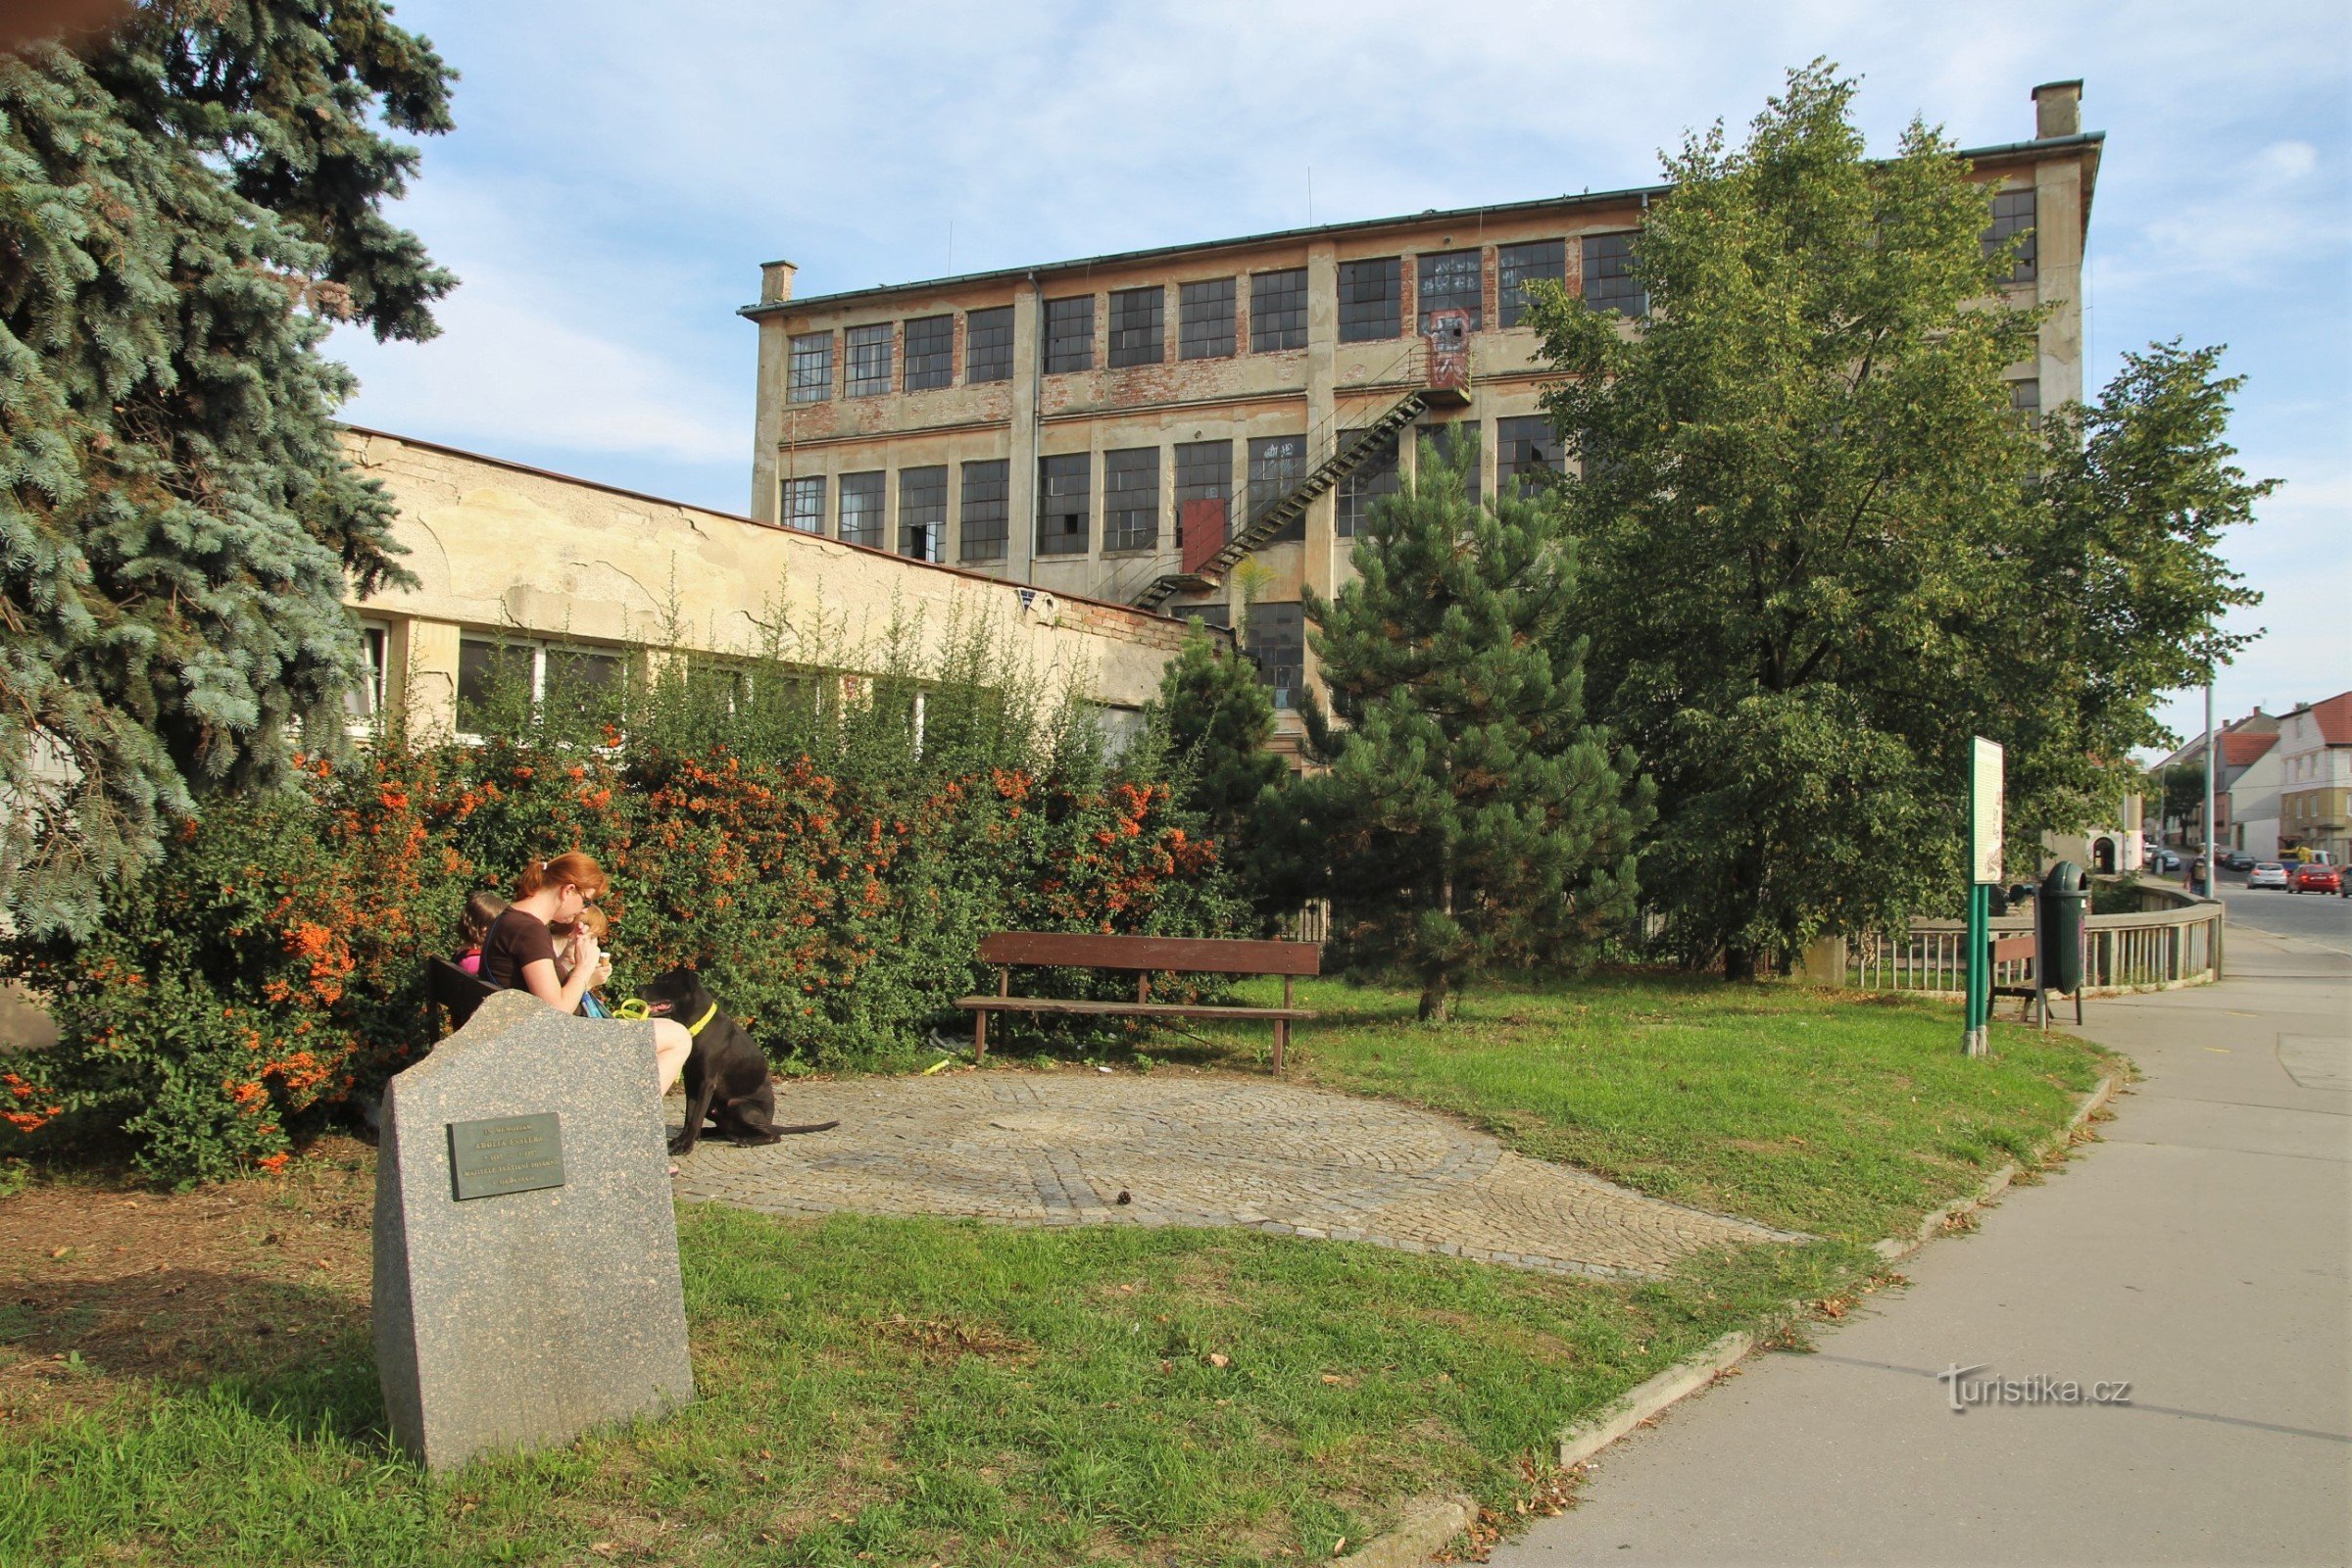 Pomnik Adolfa Esslera, w tle budynek fabryki Esslera